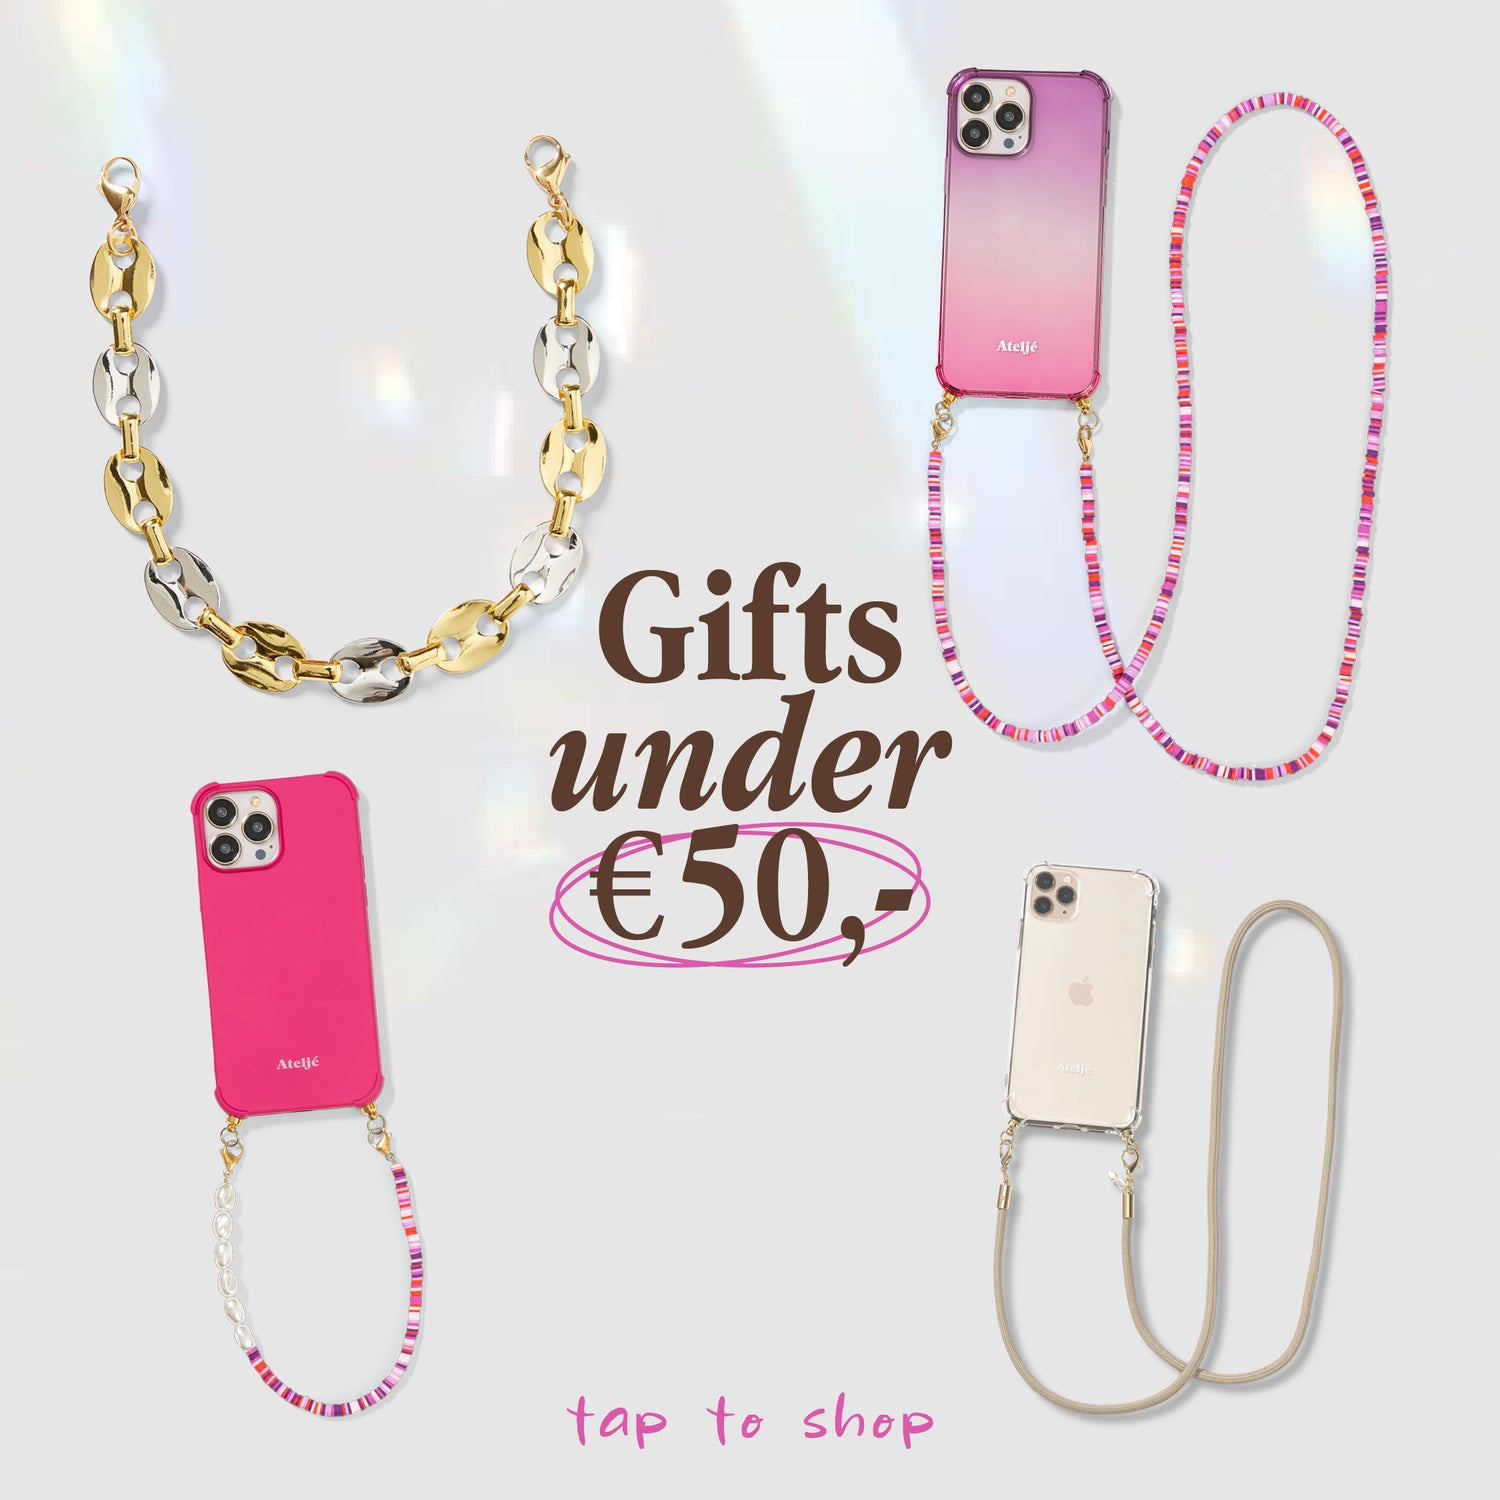 Gifts under €50,-